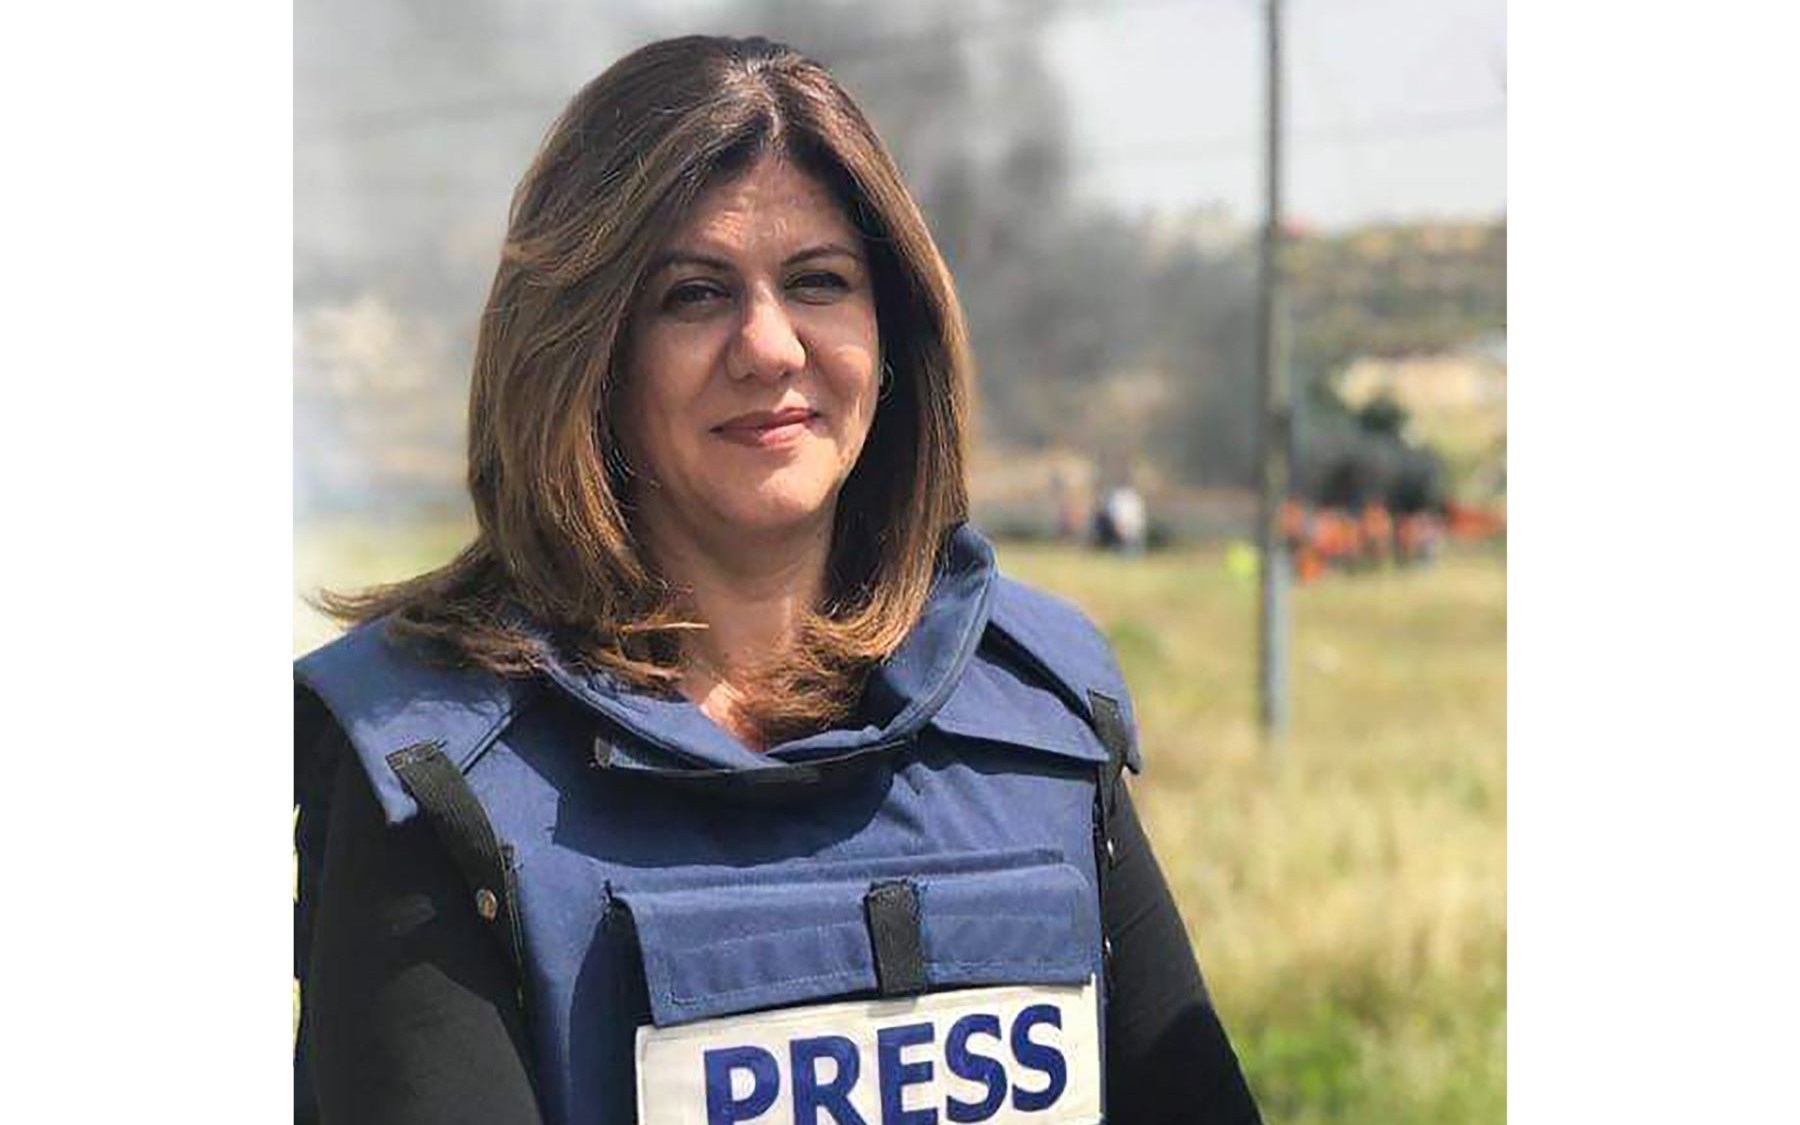 Las fuerzas israelíes dispararon la bala que mató a la periodista palestina Shirin Abu Akleh